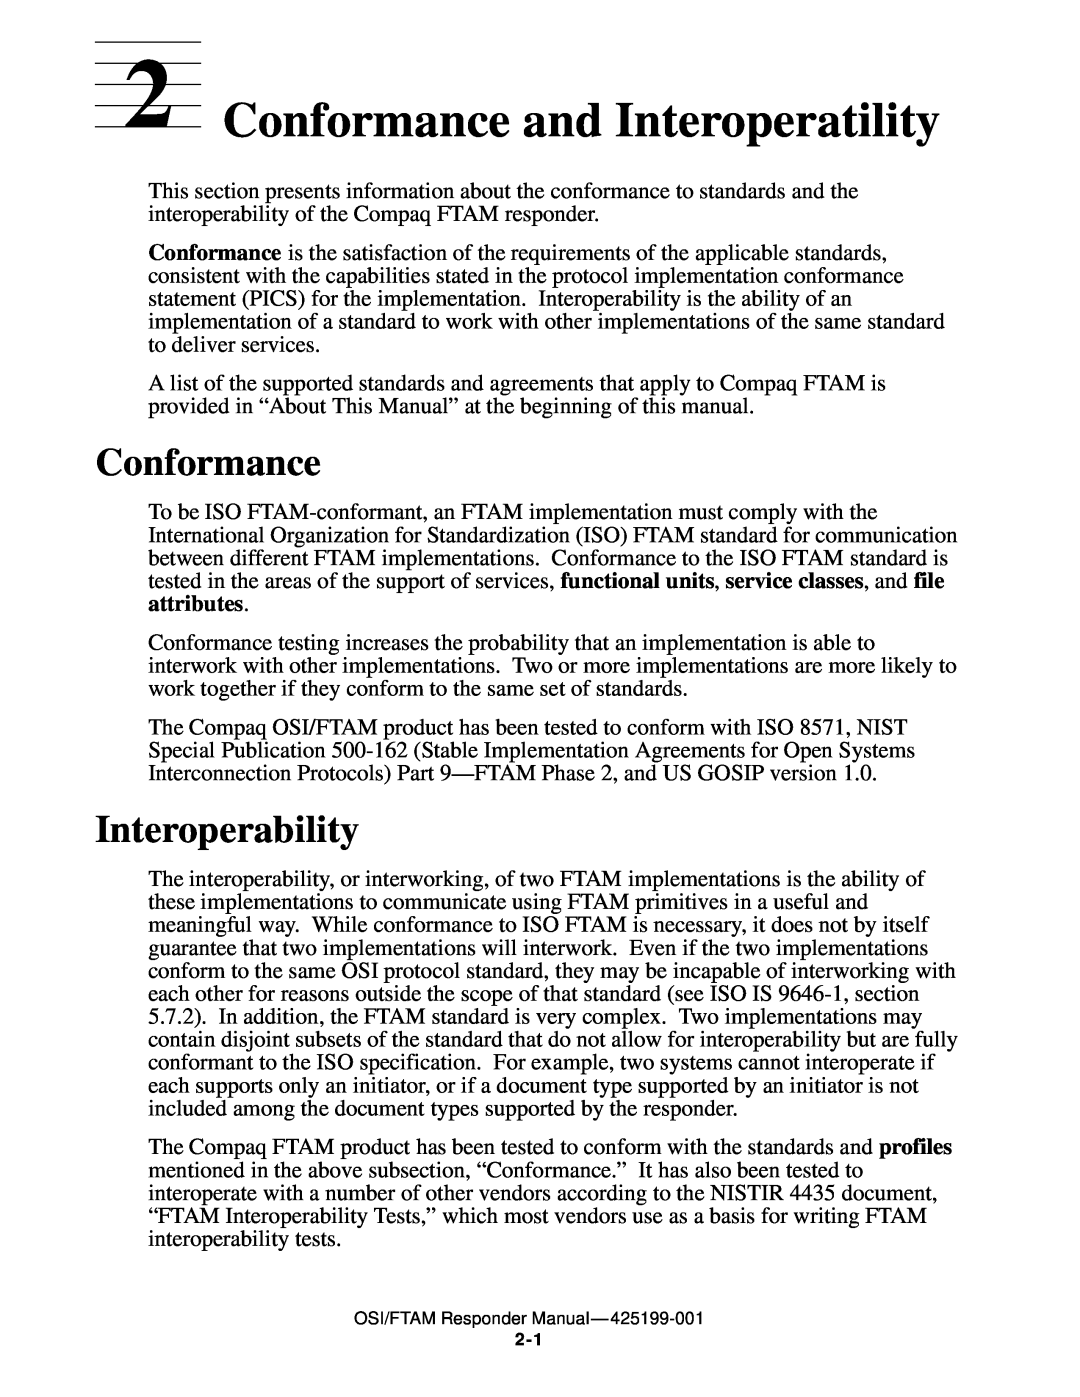 Compaq OSI/FTAM D43, OSI/APLMGR D43 manual Conformance and Interoperatility, Interoperability 